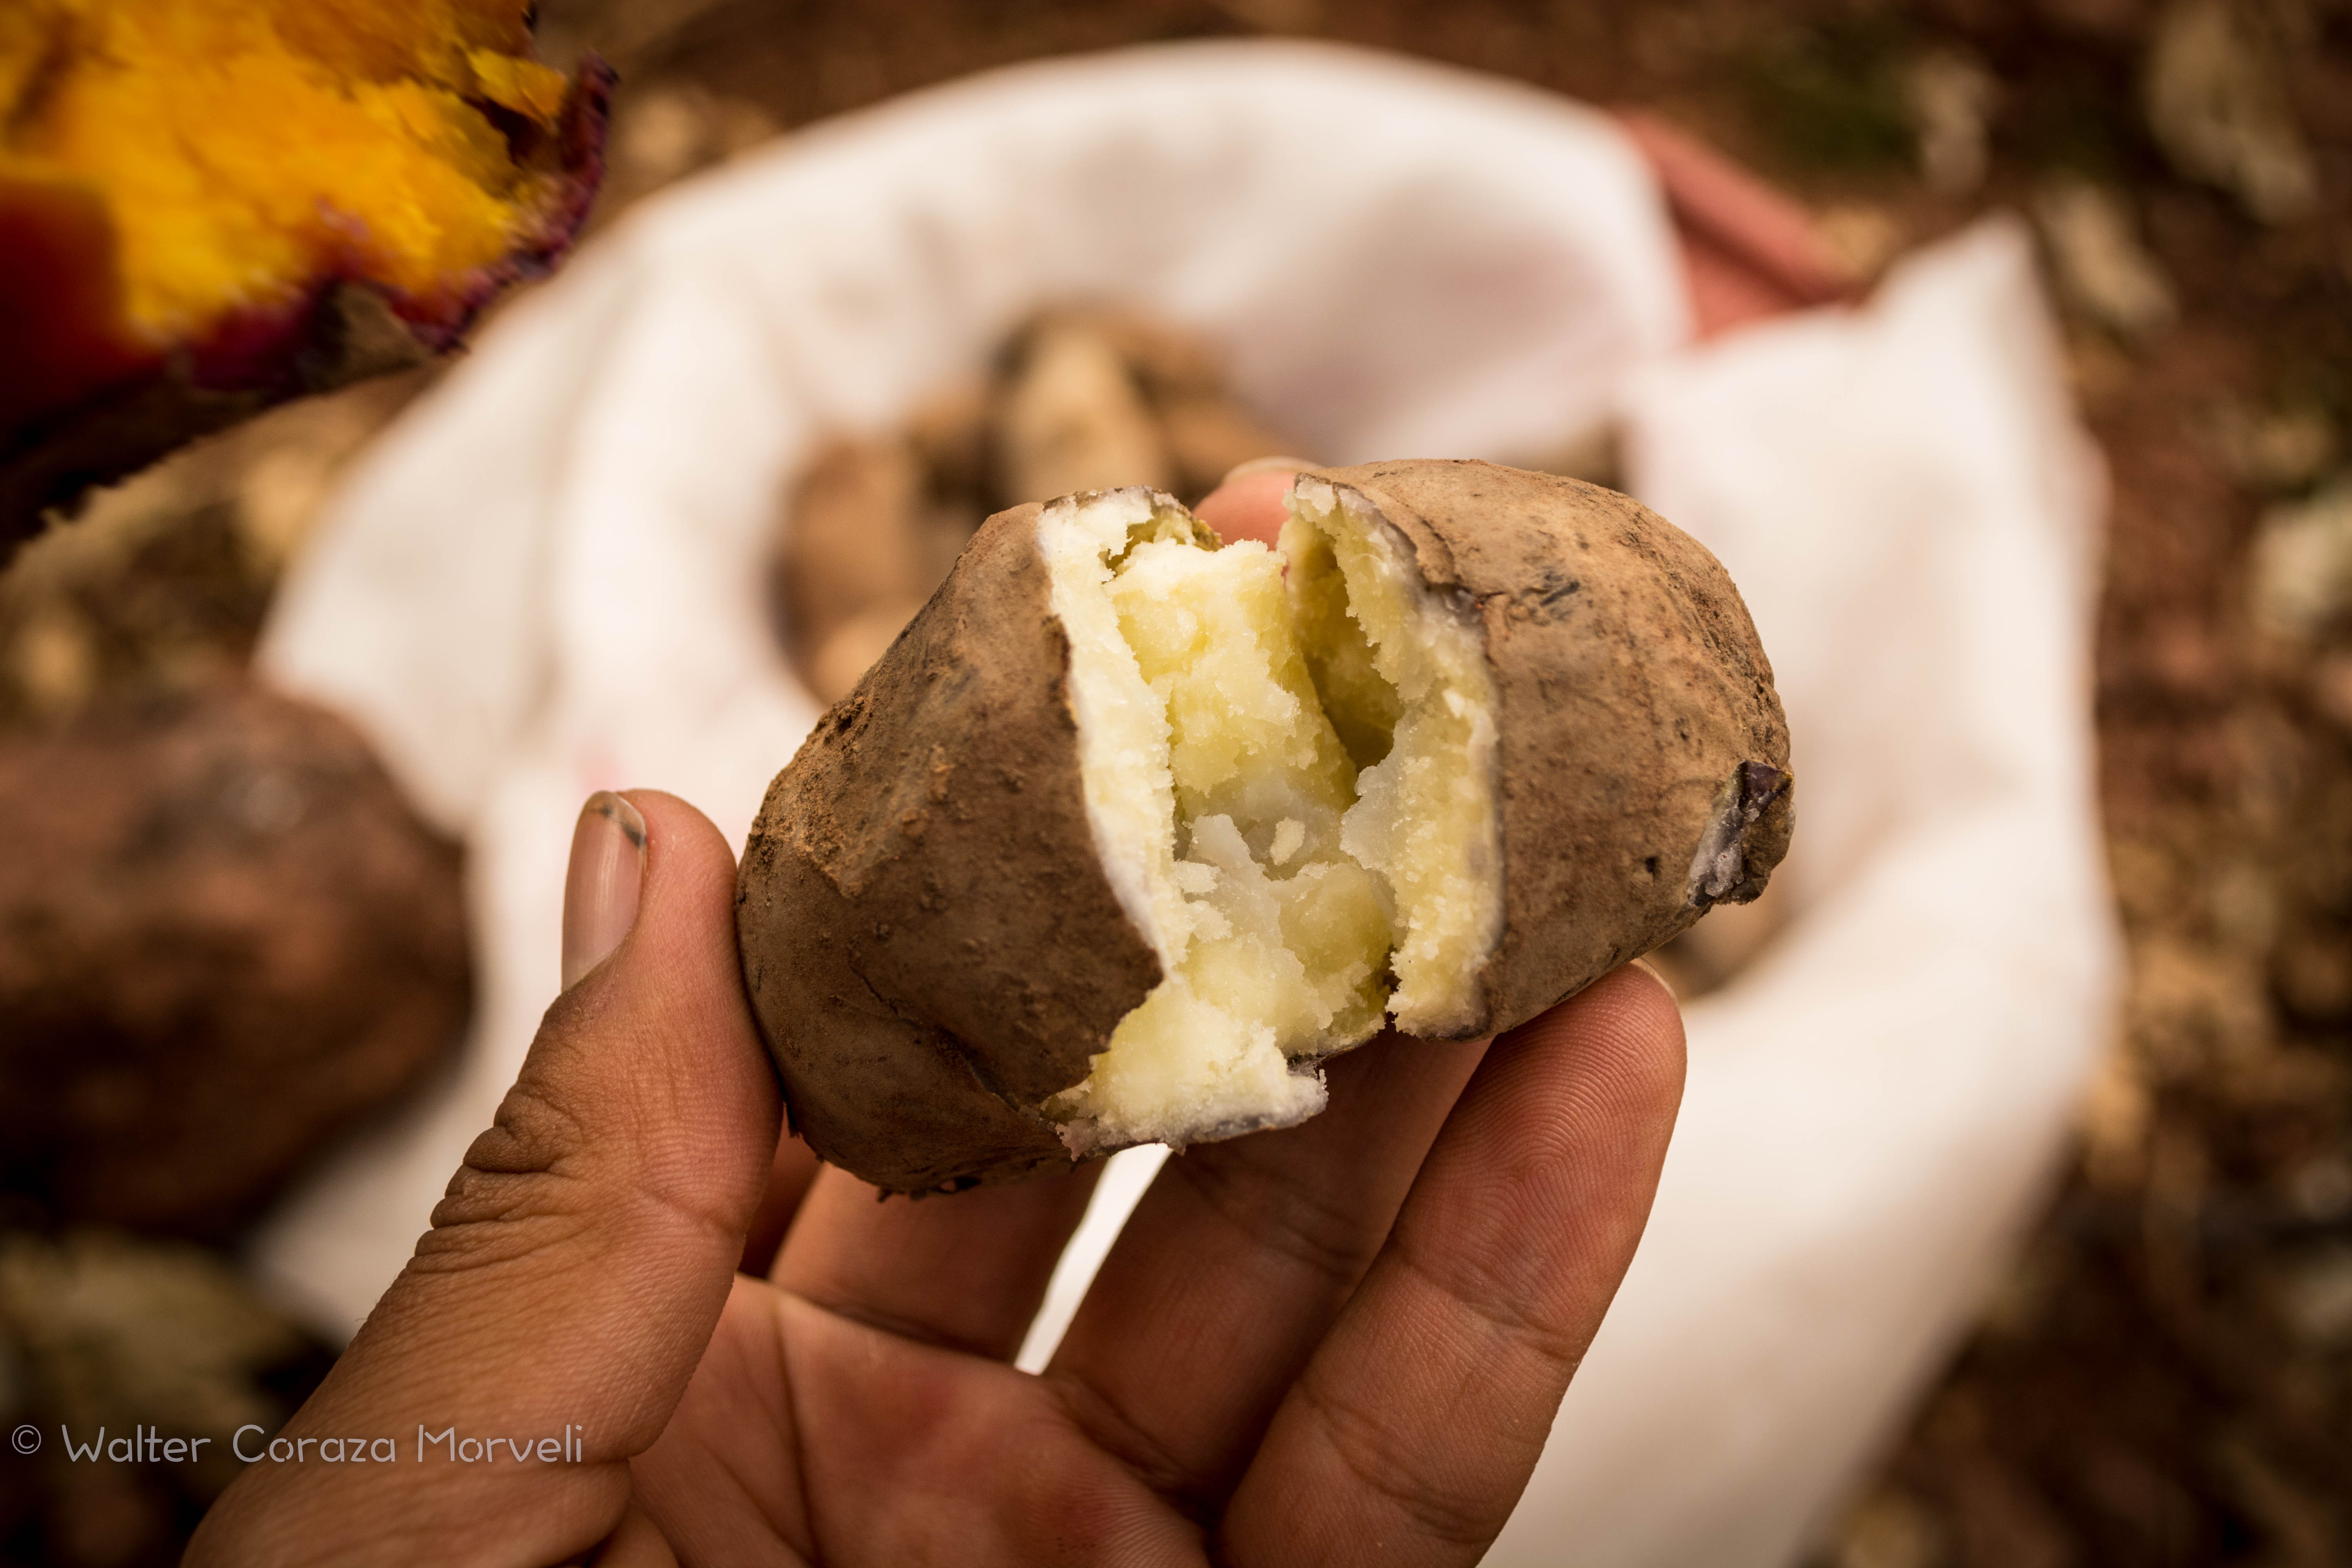 Delicious Huatia Baked Potato (Walter Coraza Morveli)q